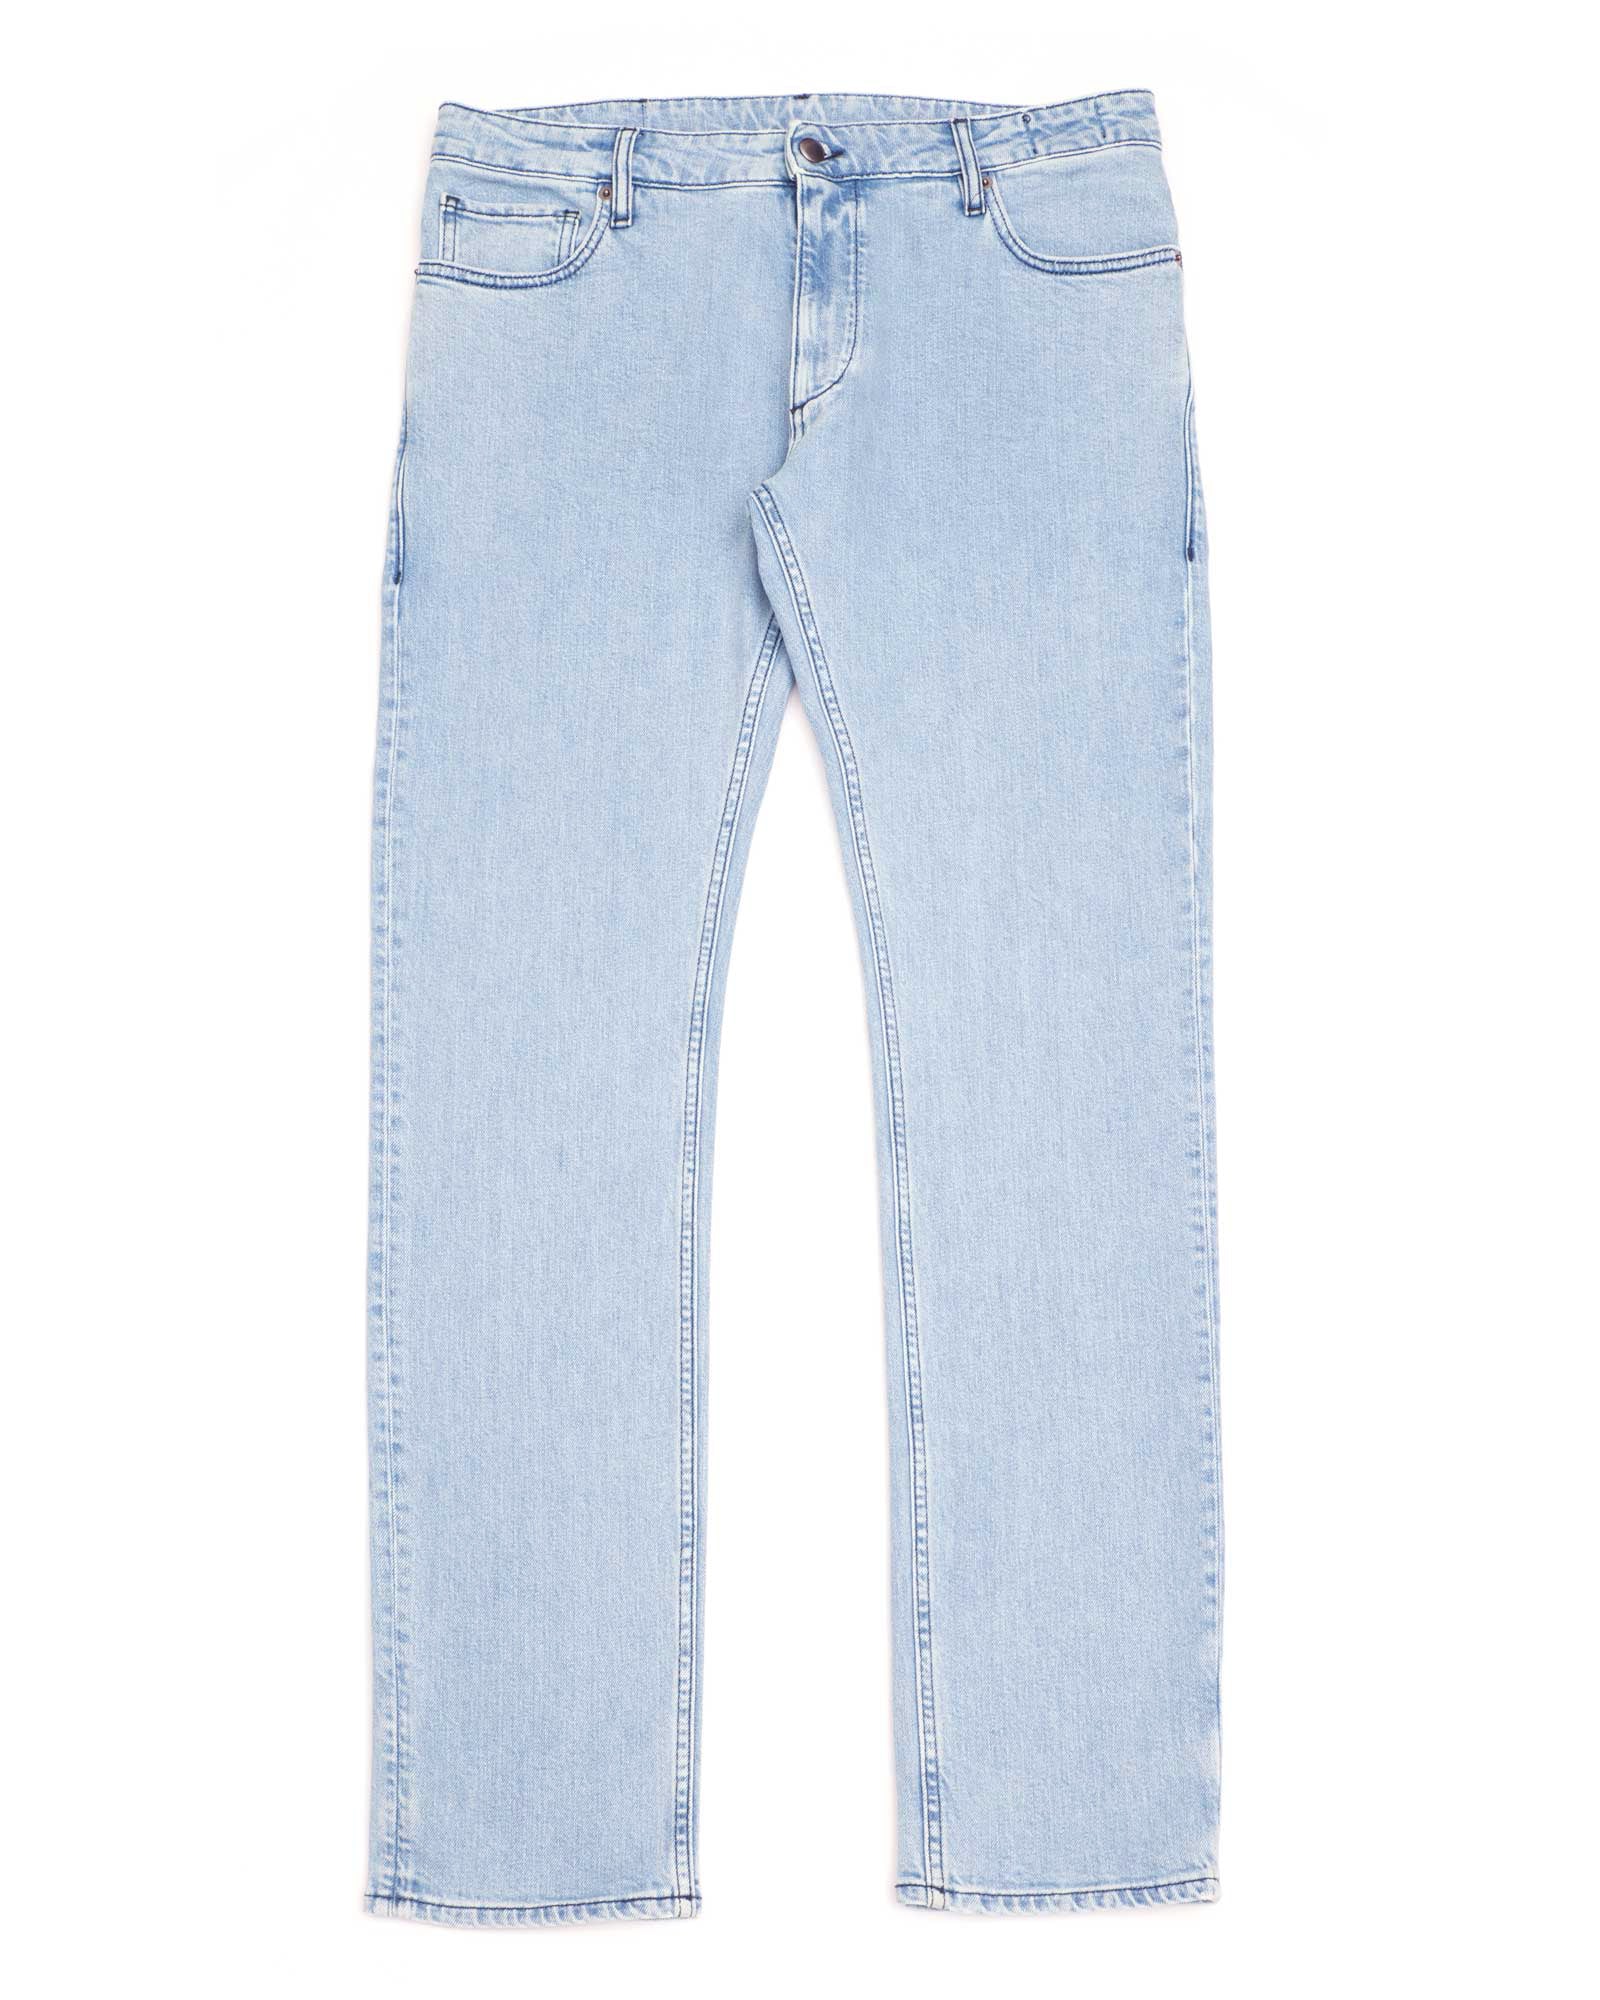 Buy Aeropostale Men Light Blue Ripped Skinny fit Jeans - NNNOW.com